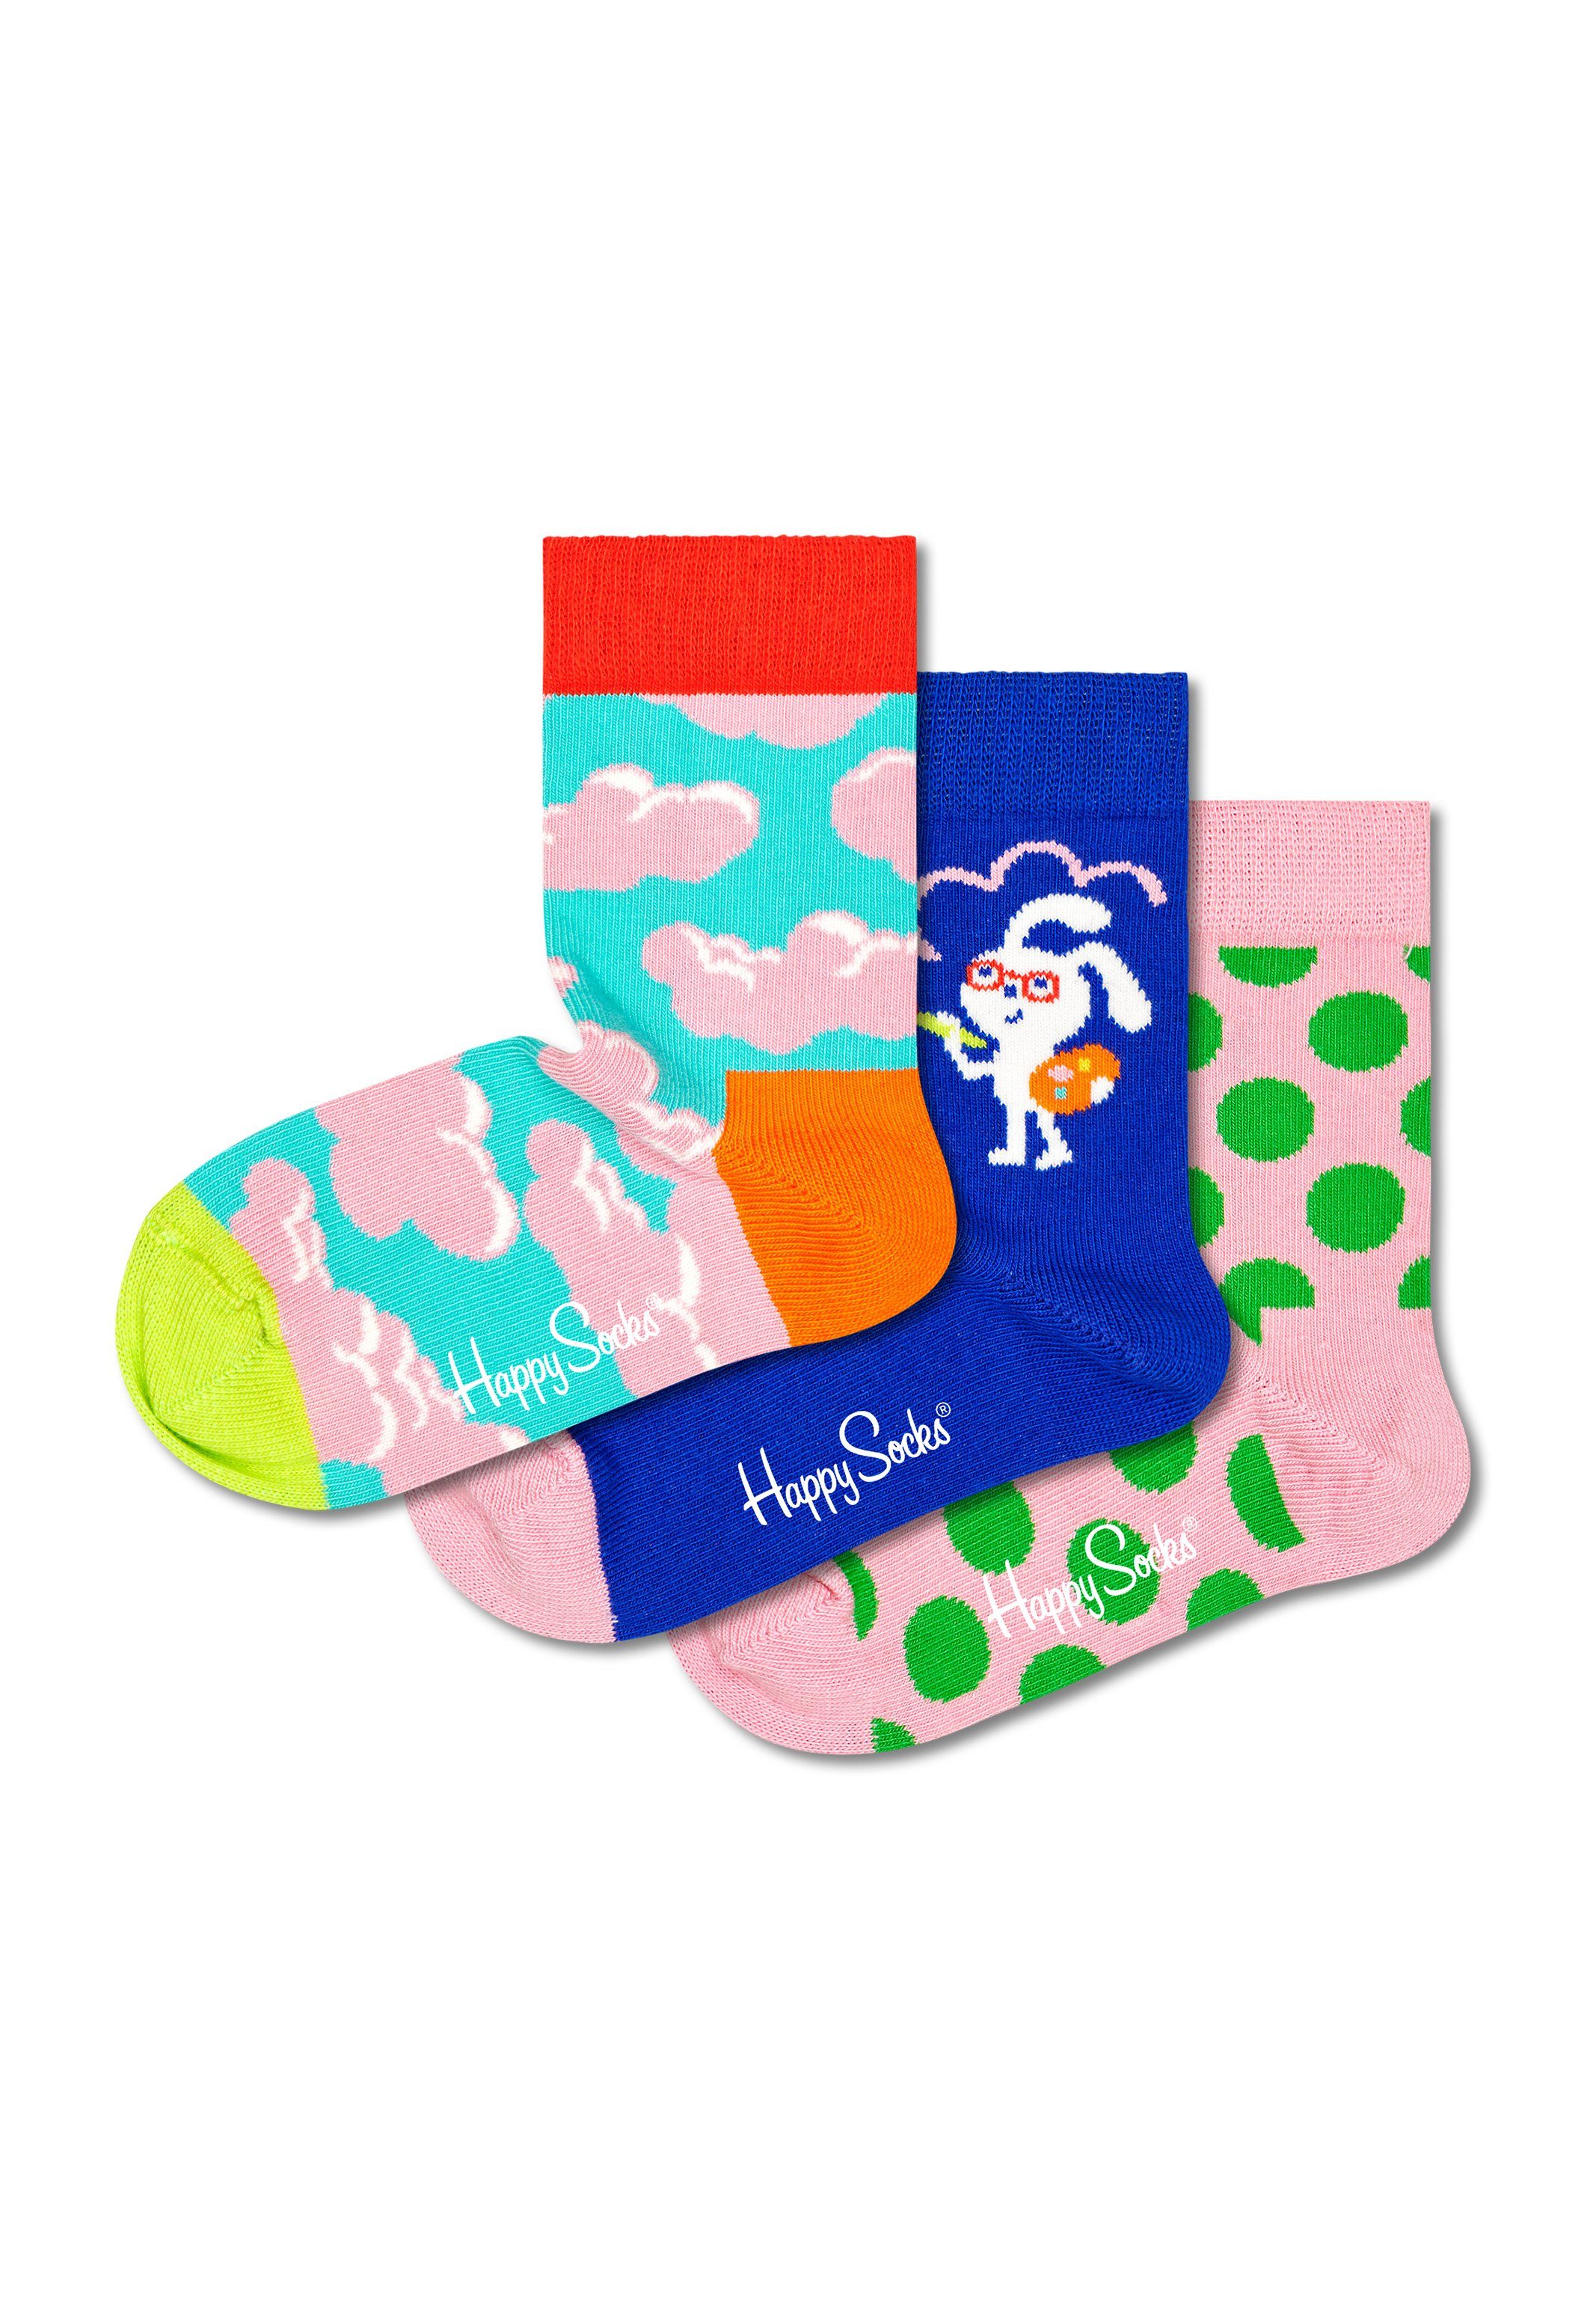 Happy Jedes - Paar (Spar-Set, Socken bunte Baumwolle Box Geschenk Over - Paar einer Muster Paar Farben 3 unterschiedliche zeigt 3 und The 3-Paar) in Socks Rainbow Geschenkbox, Socken Kids Langsocken